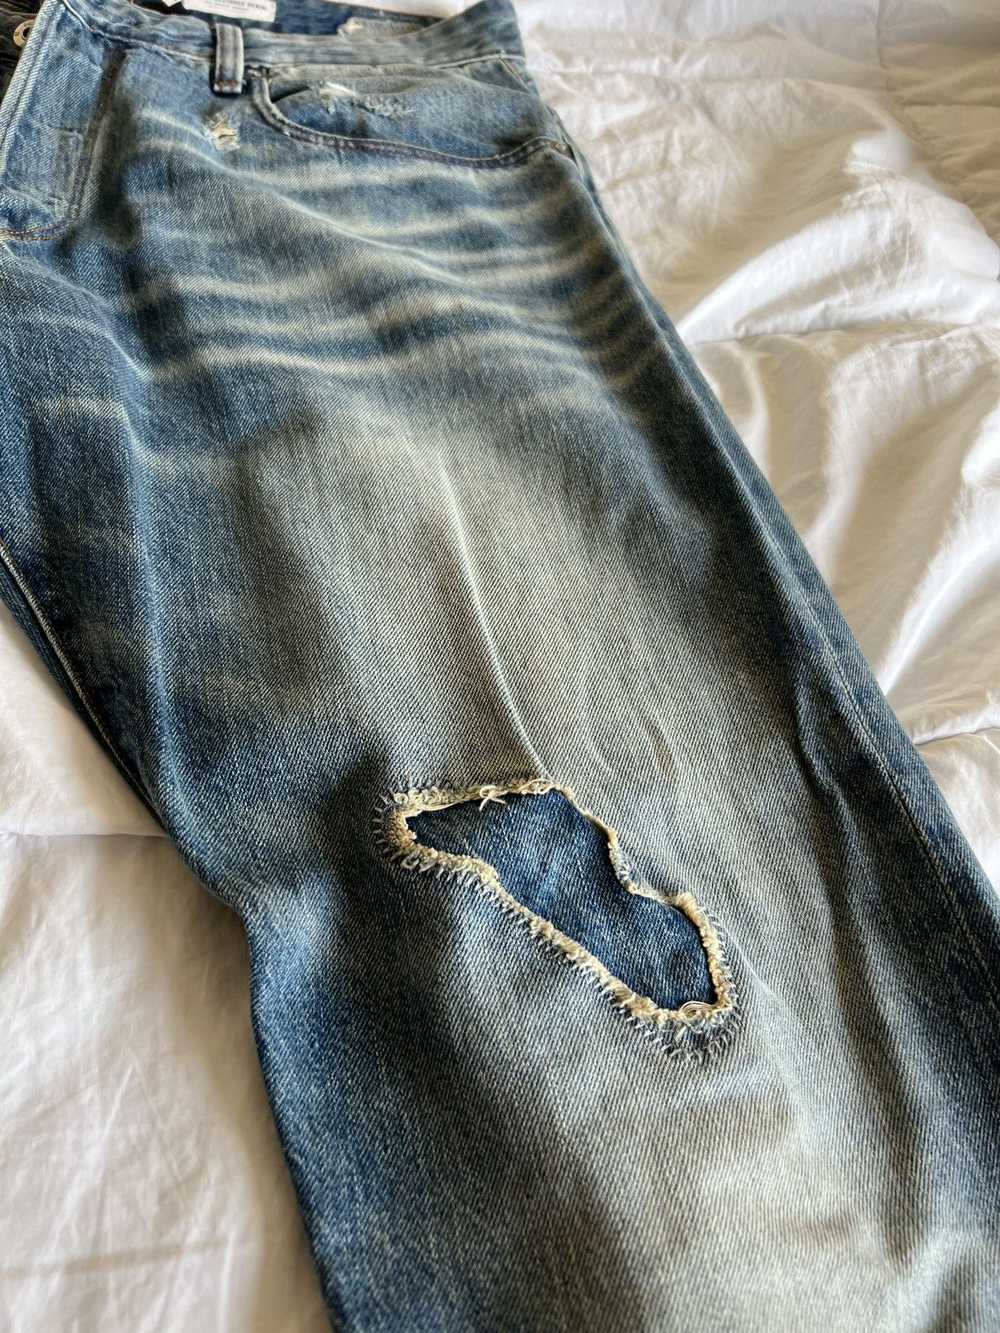 Gstar g star slim denim distressed jeans - image 4